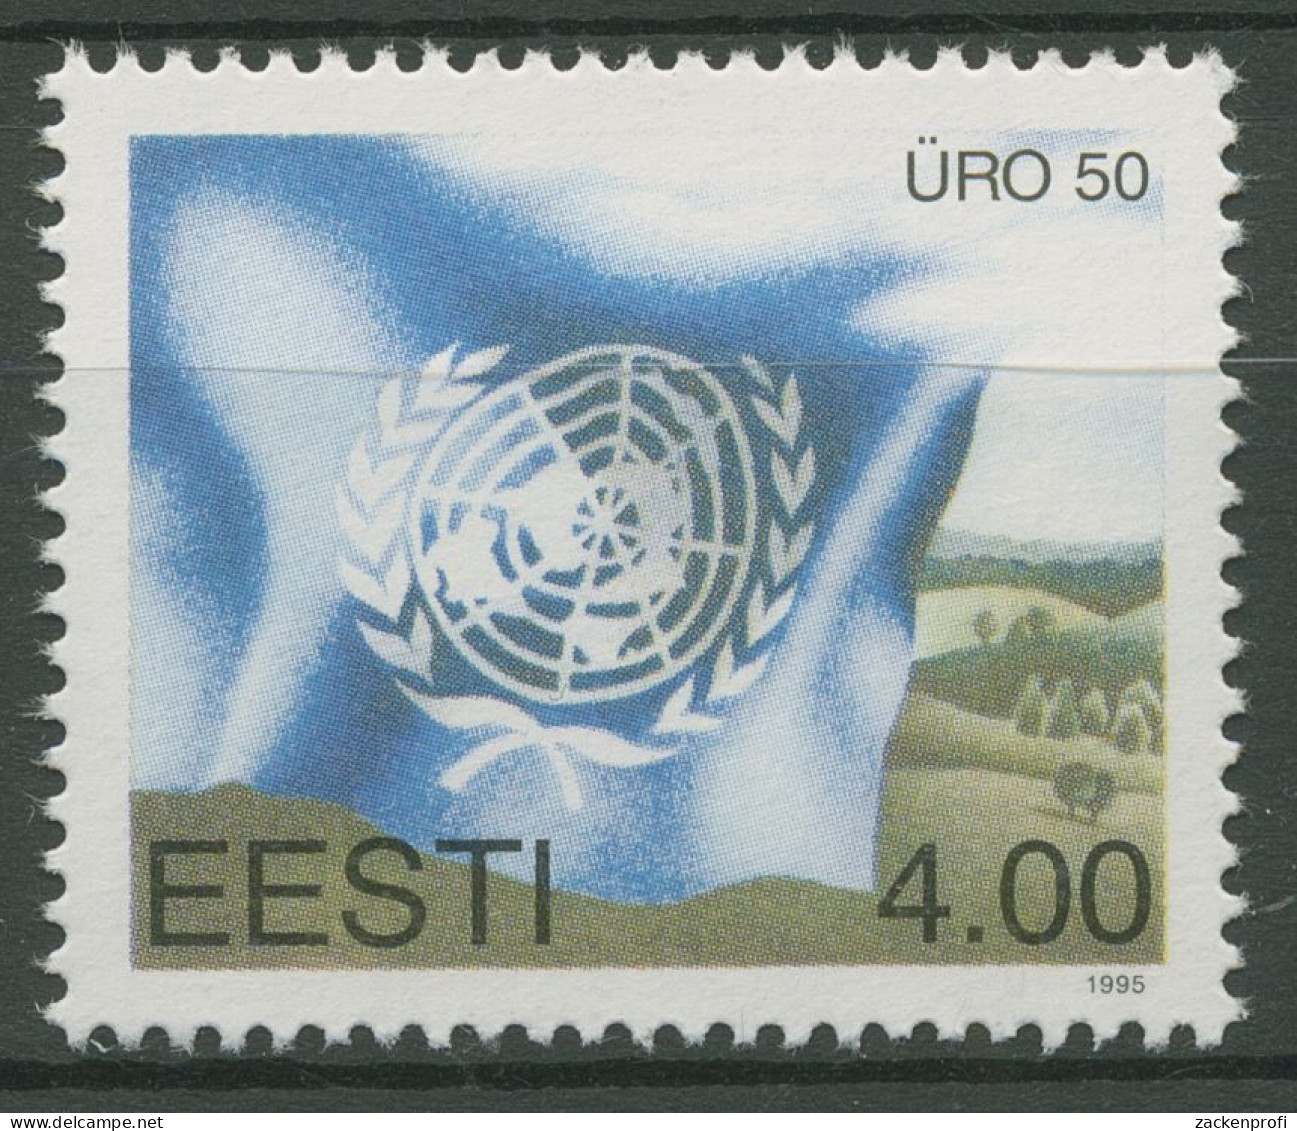 Estland 1995 Vereinte Nationen UNO Flagge 255 Postfrisch - Estonia